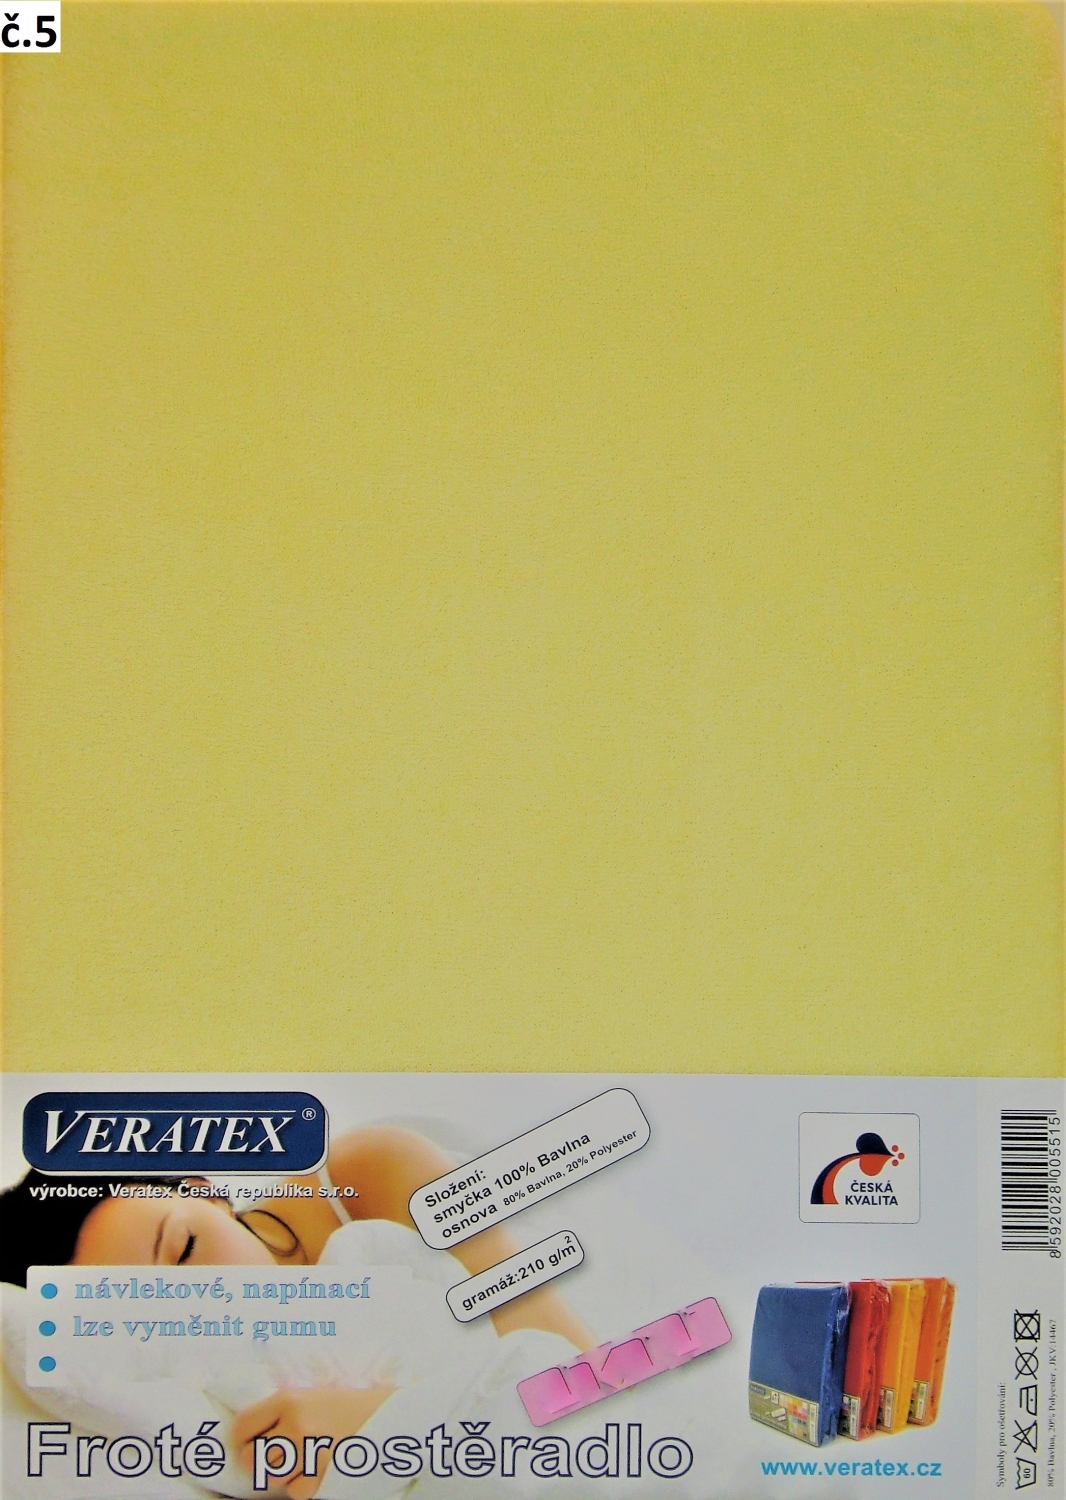 Veratex Froté prostěradlo 180x220/16 cm (č. 5-sv.žlutá) 180 x 220 cm